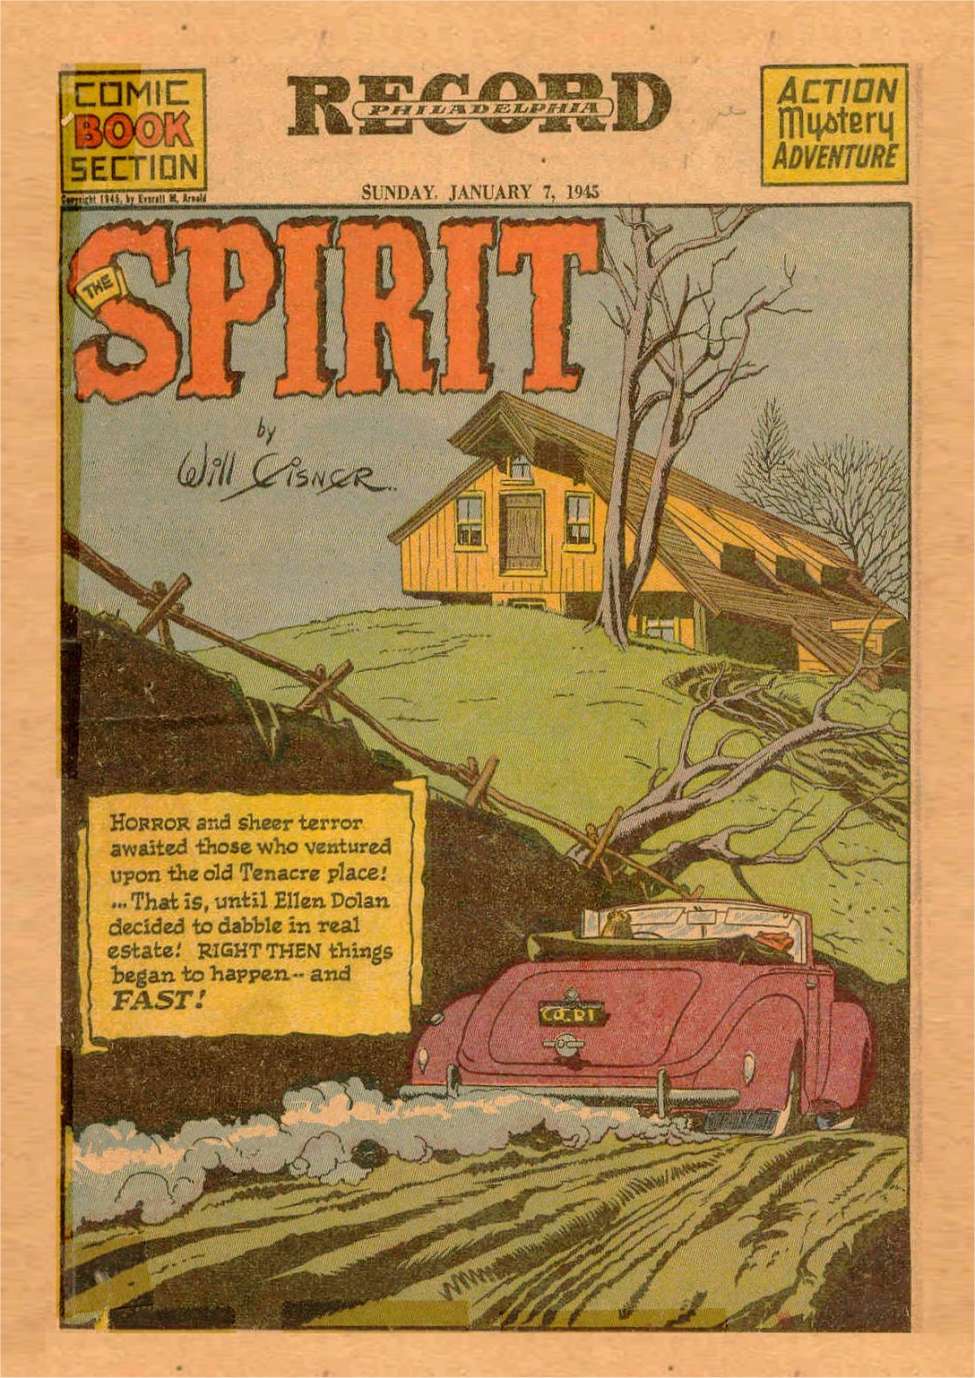 Comic Book Cover For The Spirit (1945-01-07) - Philadelphia Record